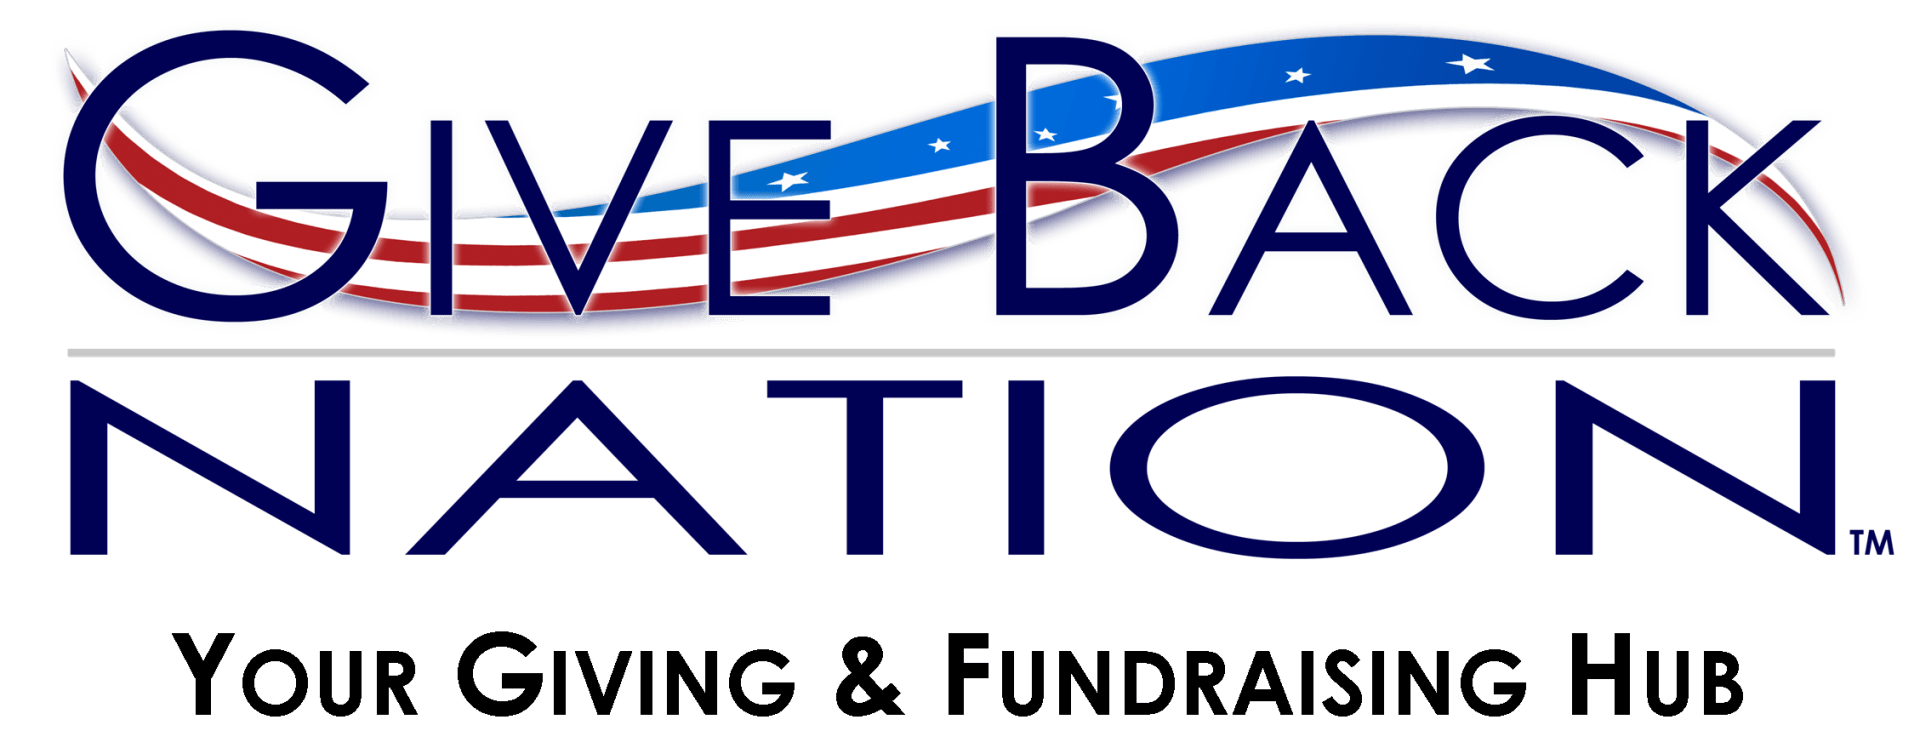 Give Back Nation serves nonprofits